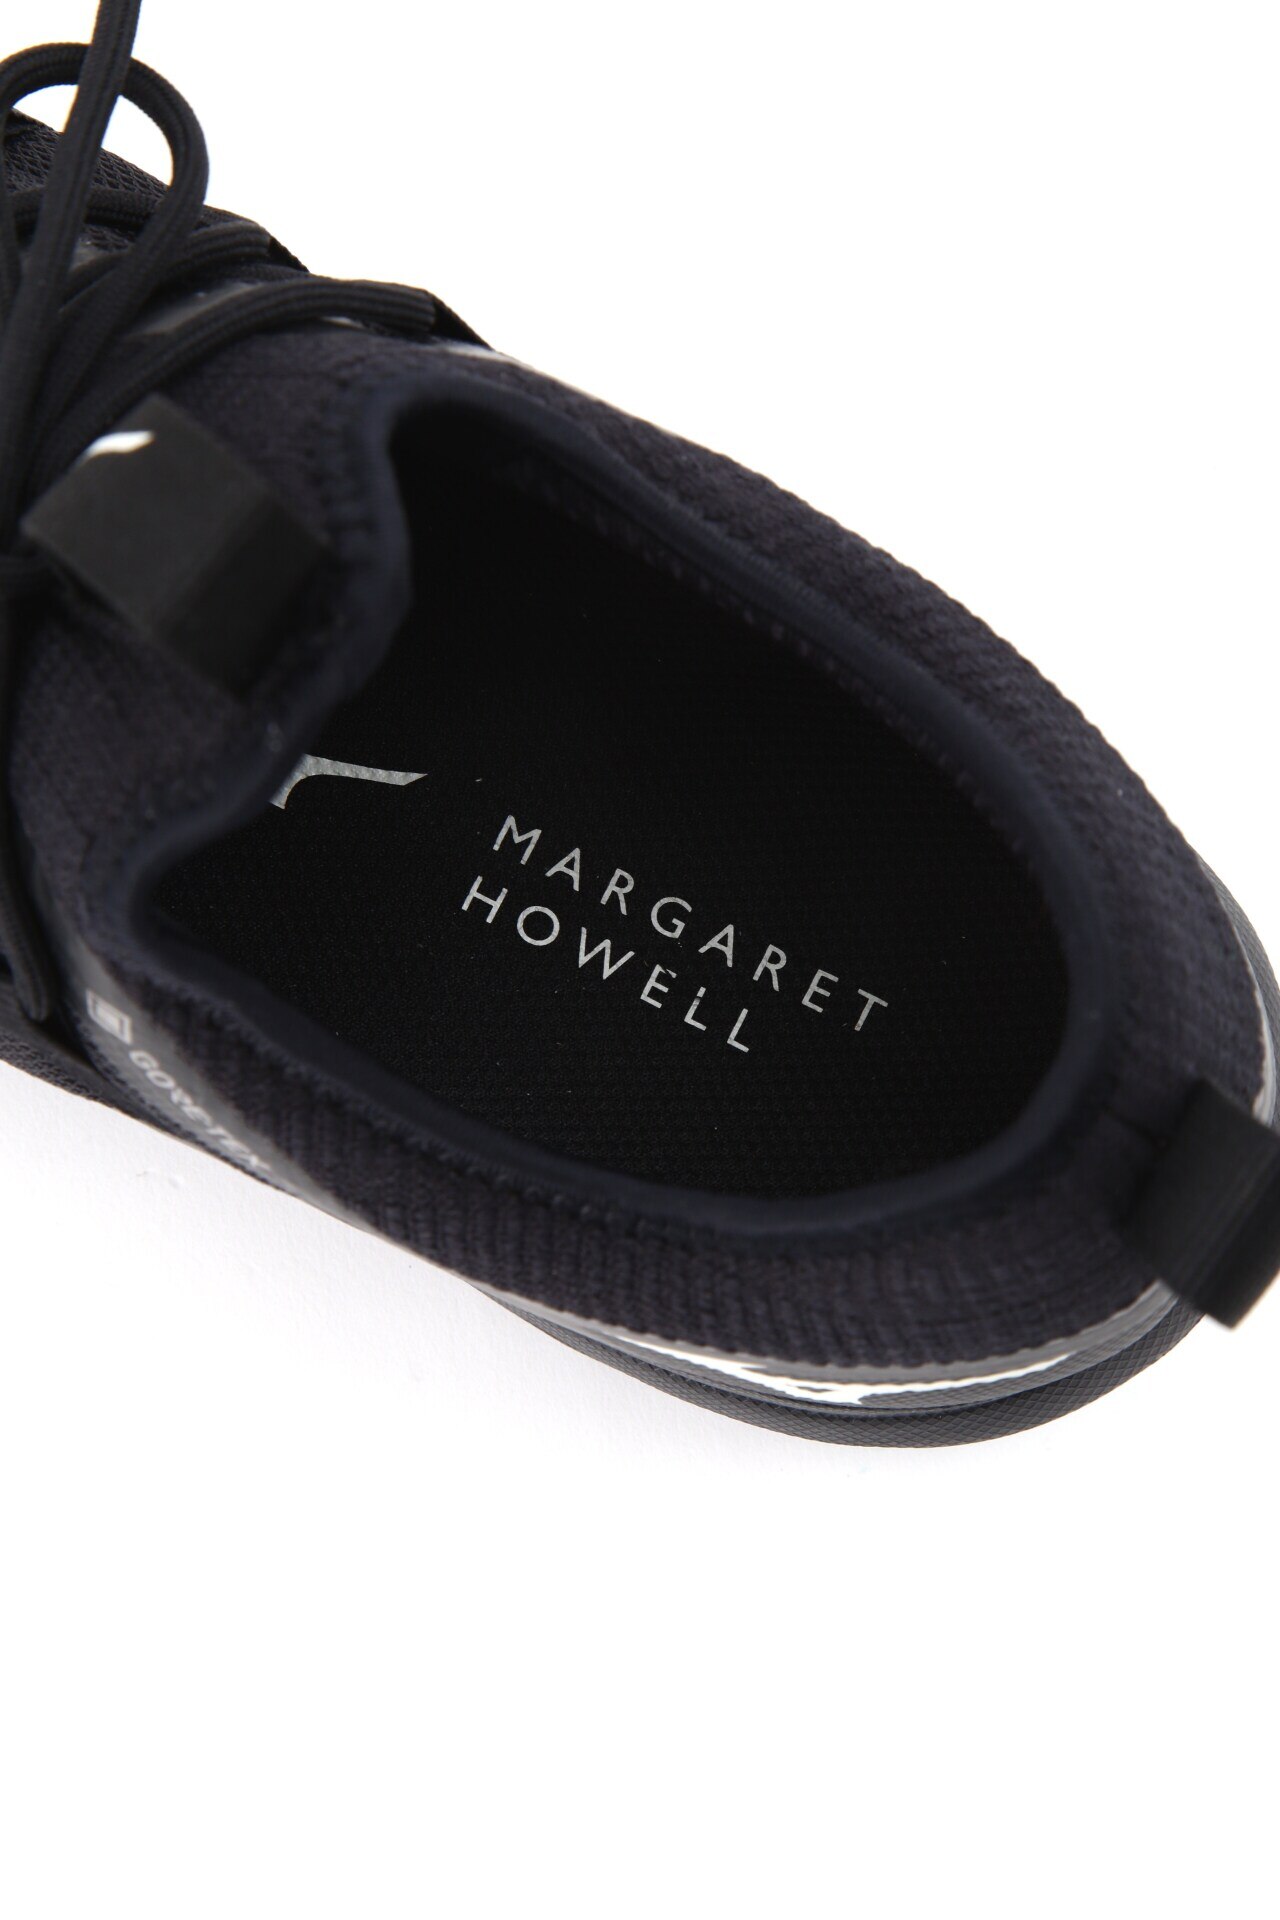 MIZUNO PULL ON WALKING SHOES|MARGARET HOWELL(マーガレット ...